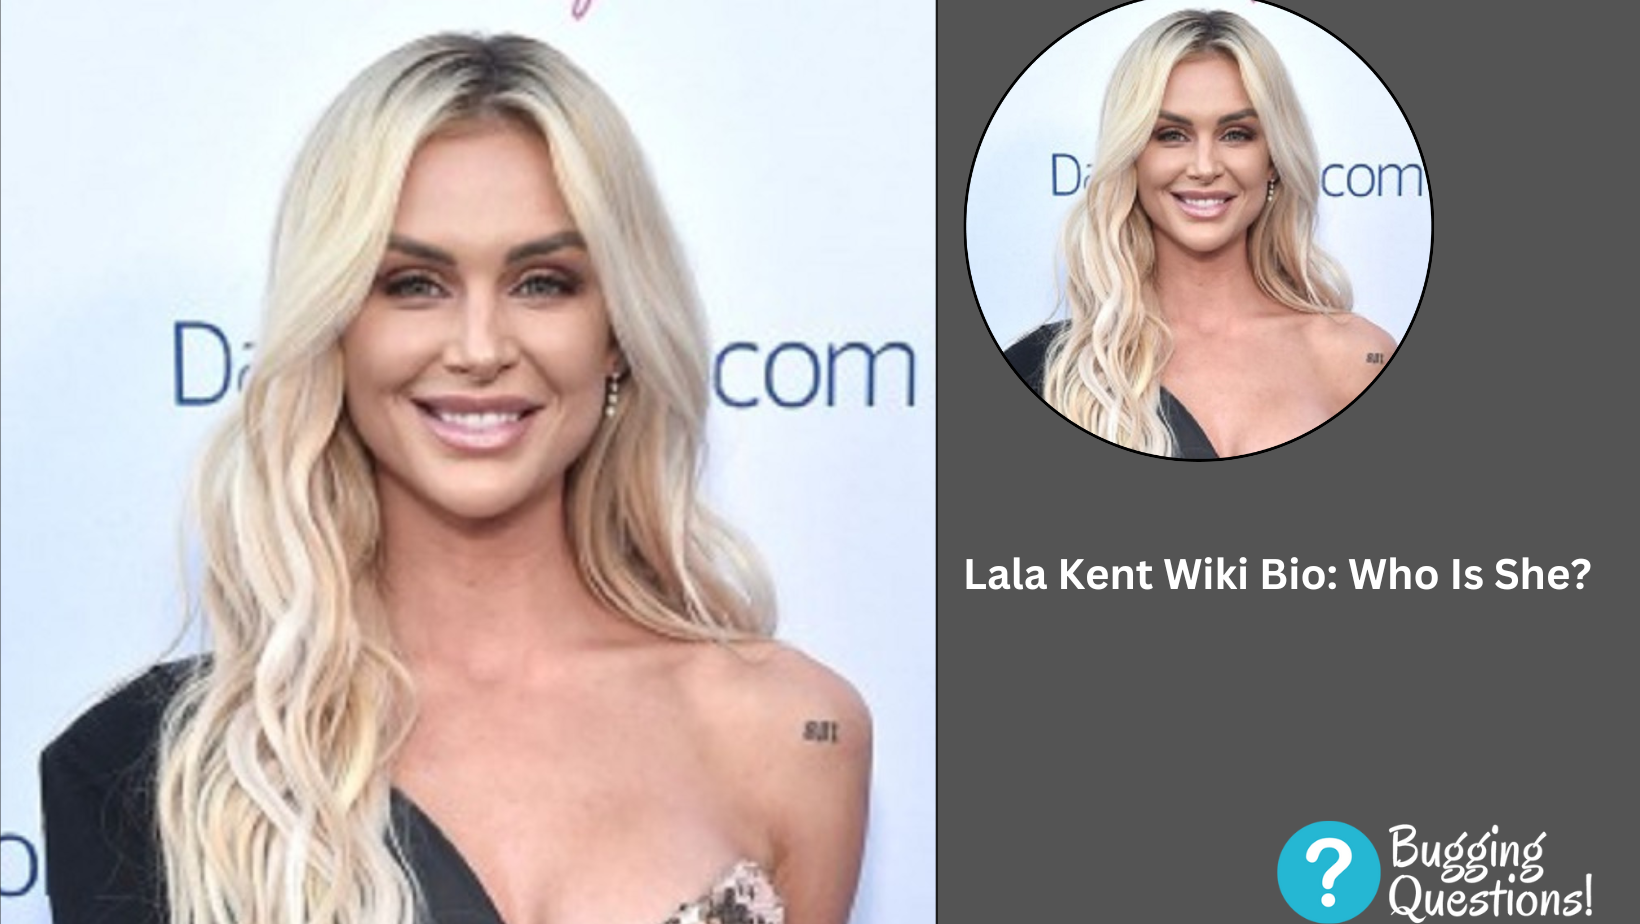 Lala Kent Wiki Bio: Who Is She?